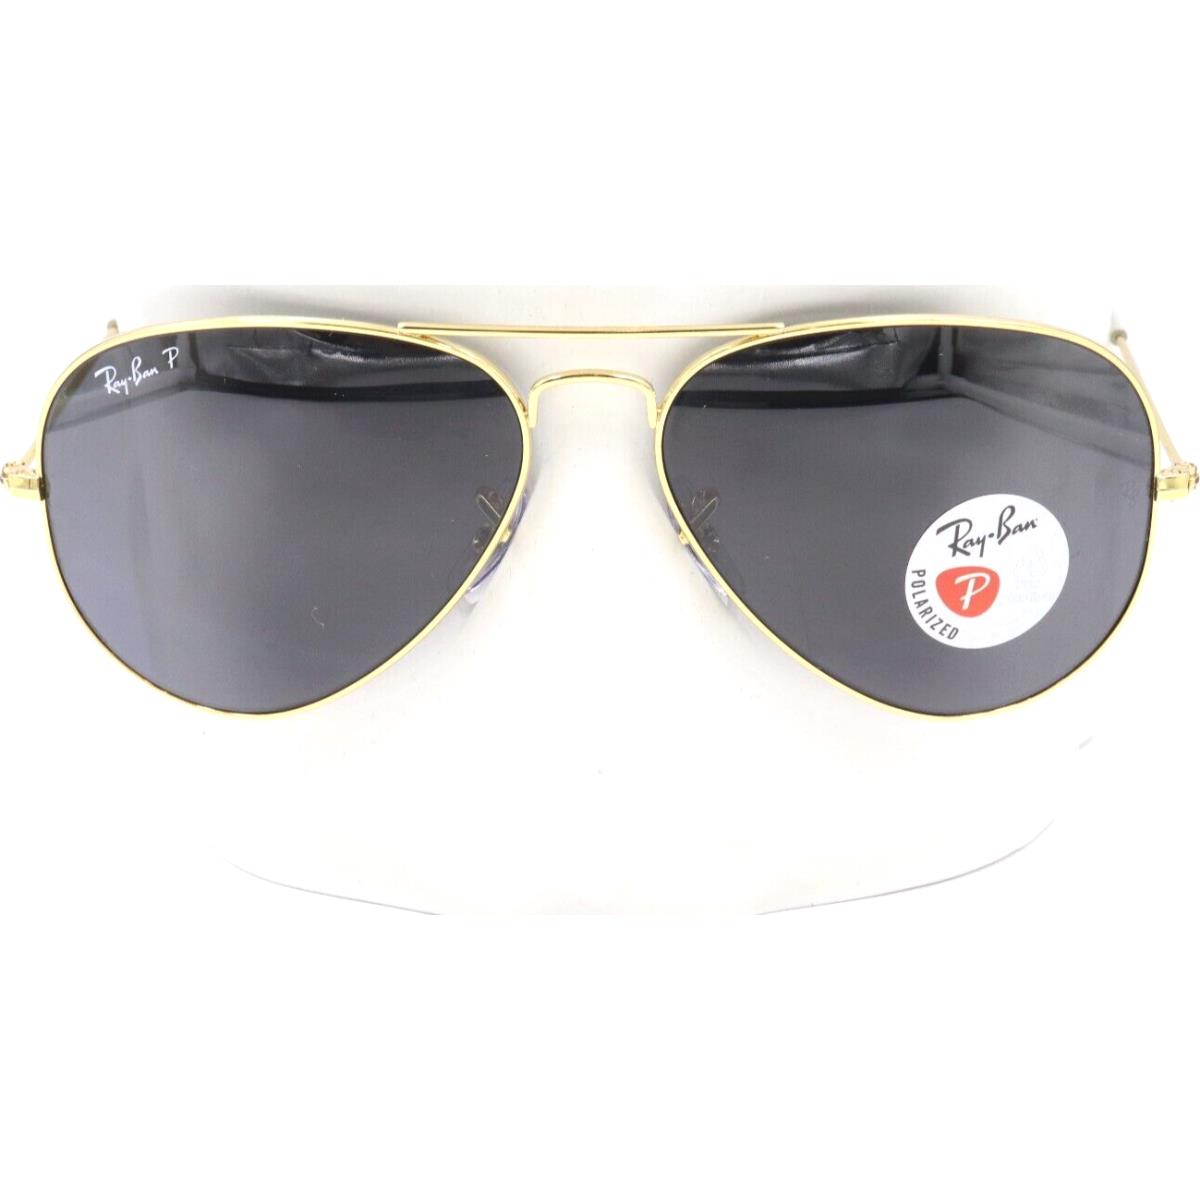 Ray-ban Aviator Legend Gold Metal Black Polarized Sunglasses RB3025 9196/48 58